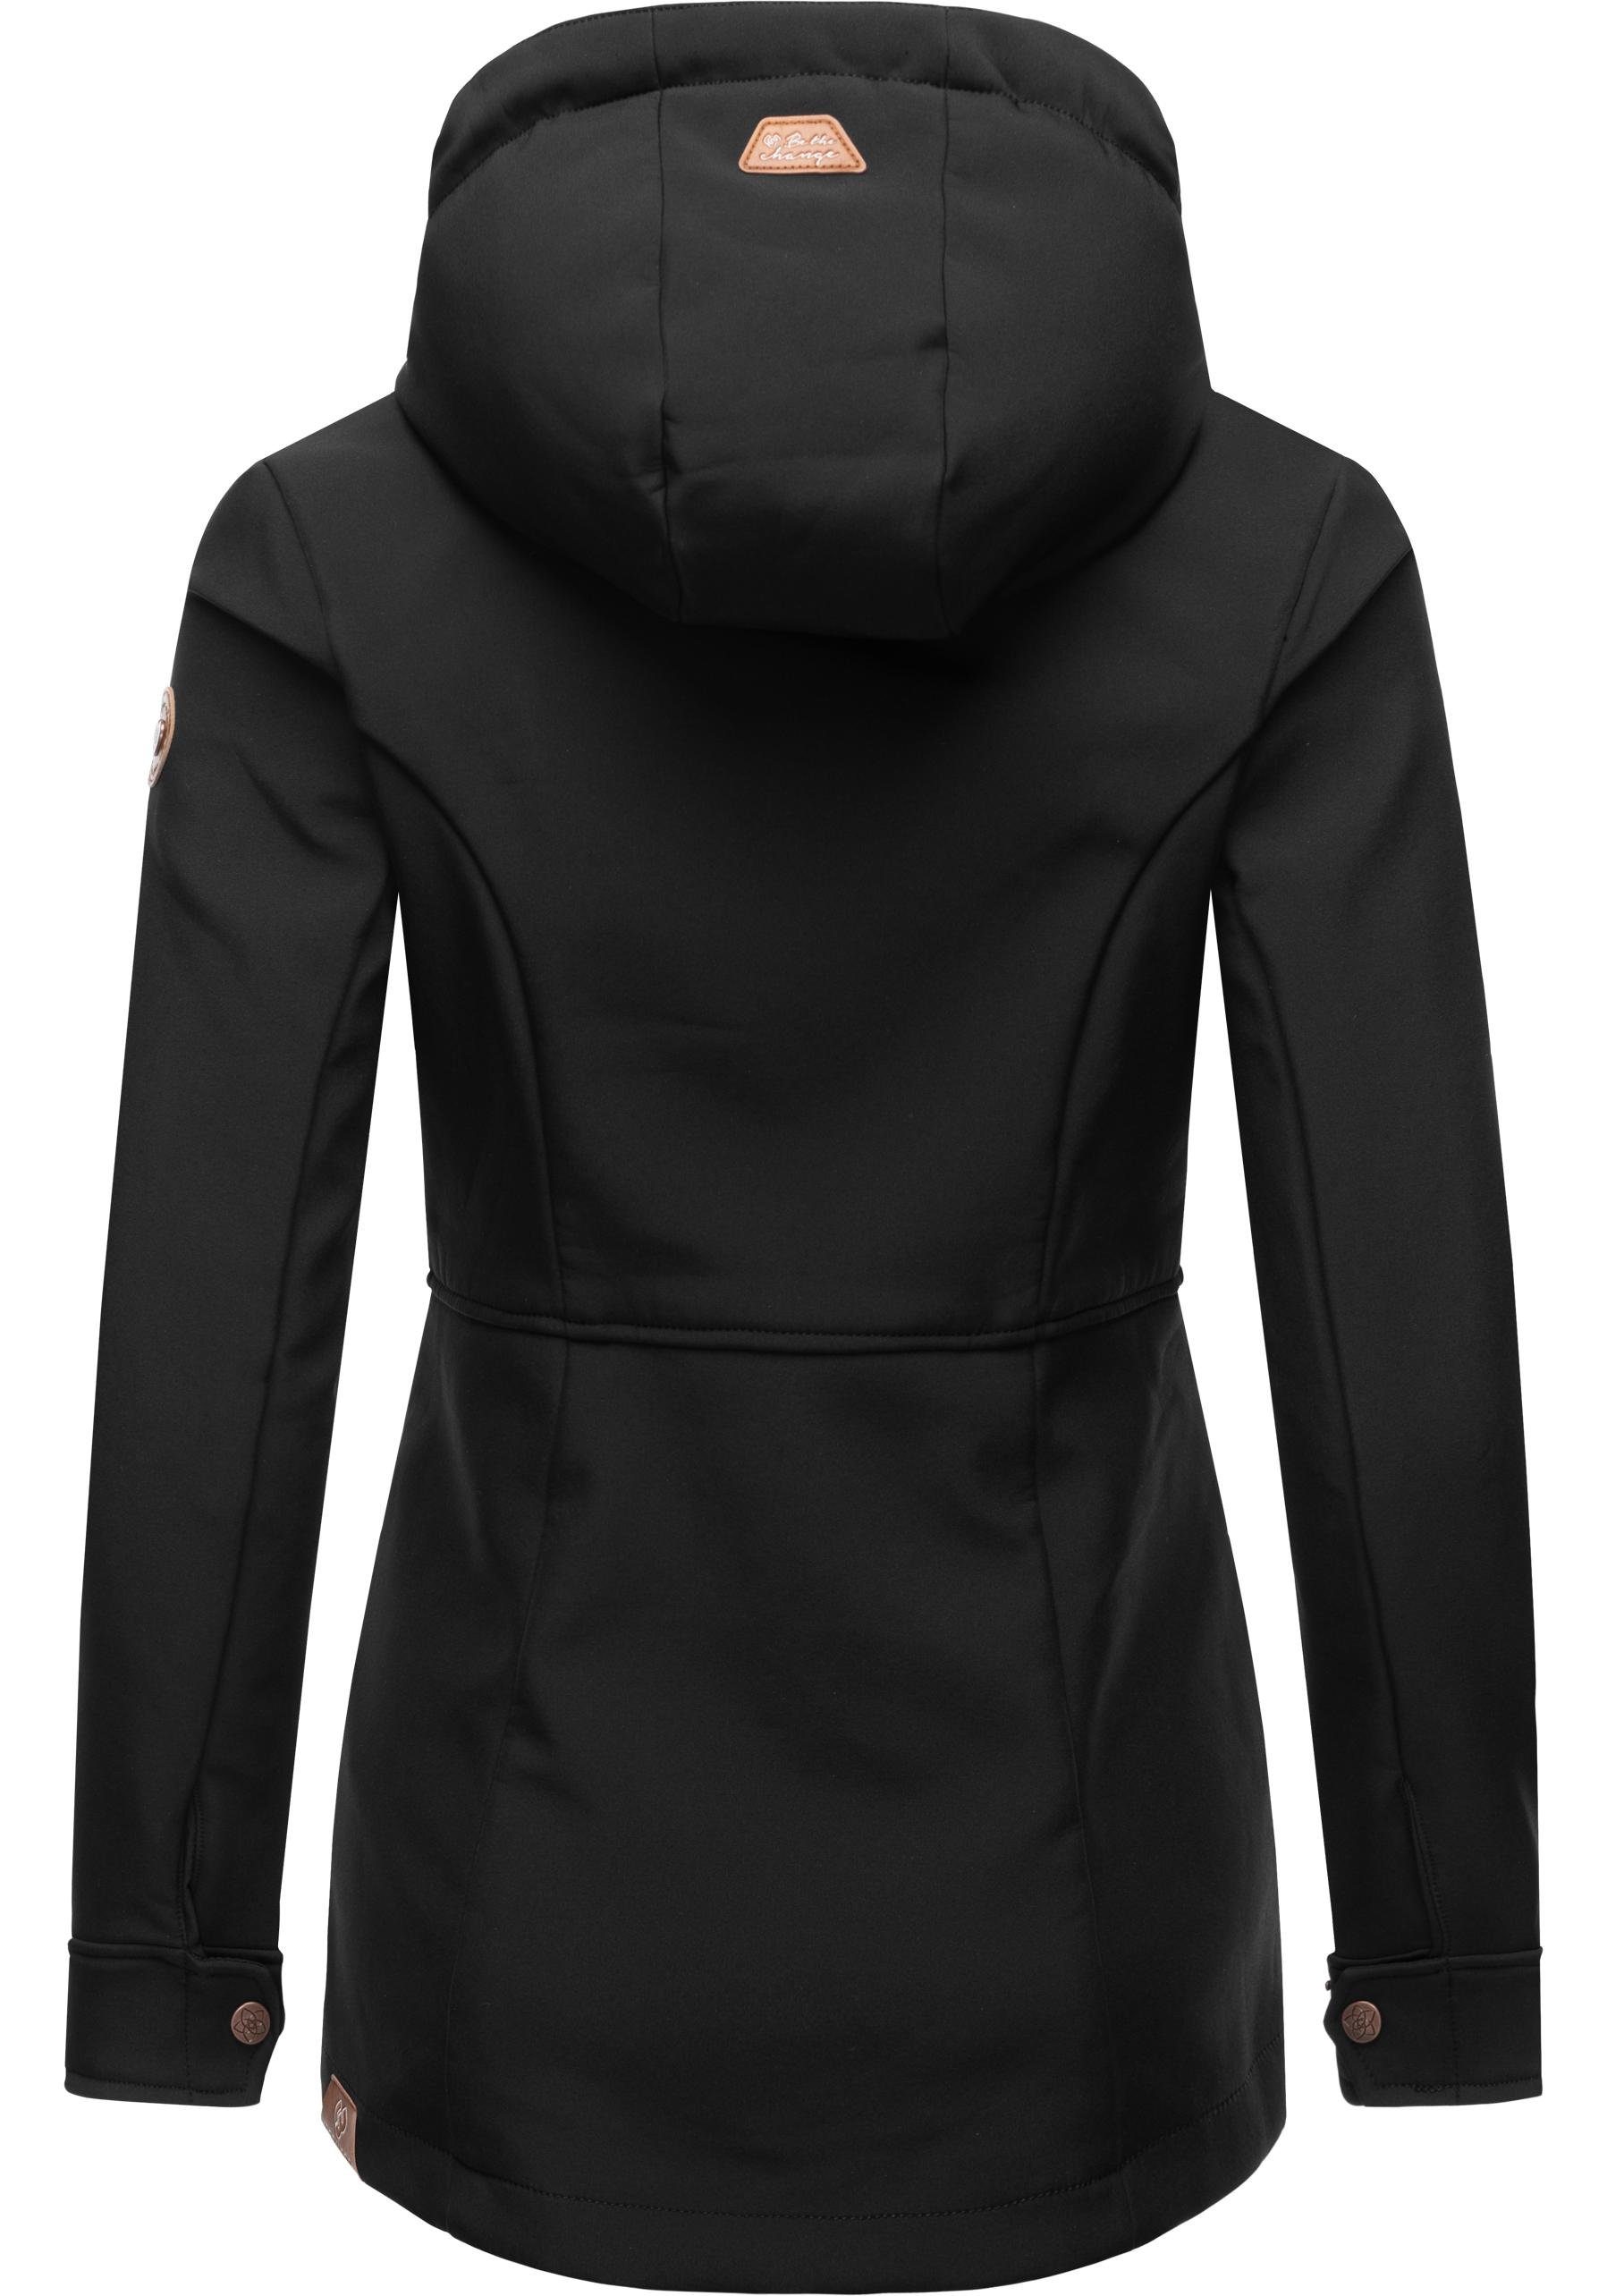 Yba Softshelljacke mit Kapuze schwarz Outdoorjacke sportliche Ragwear Damen